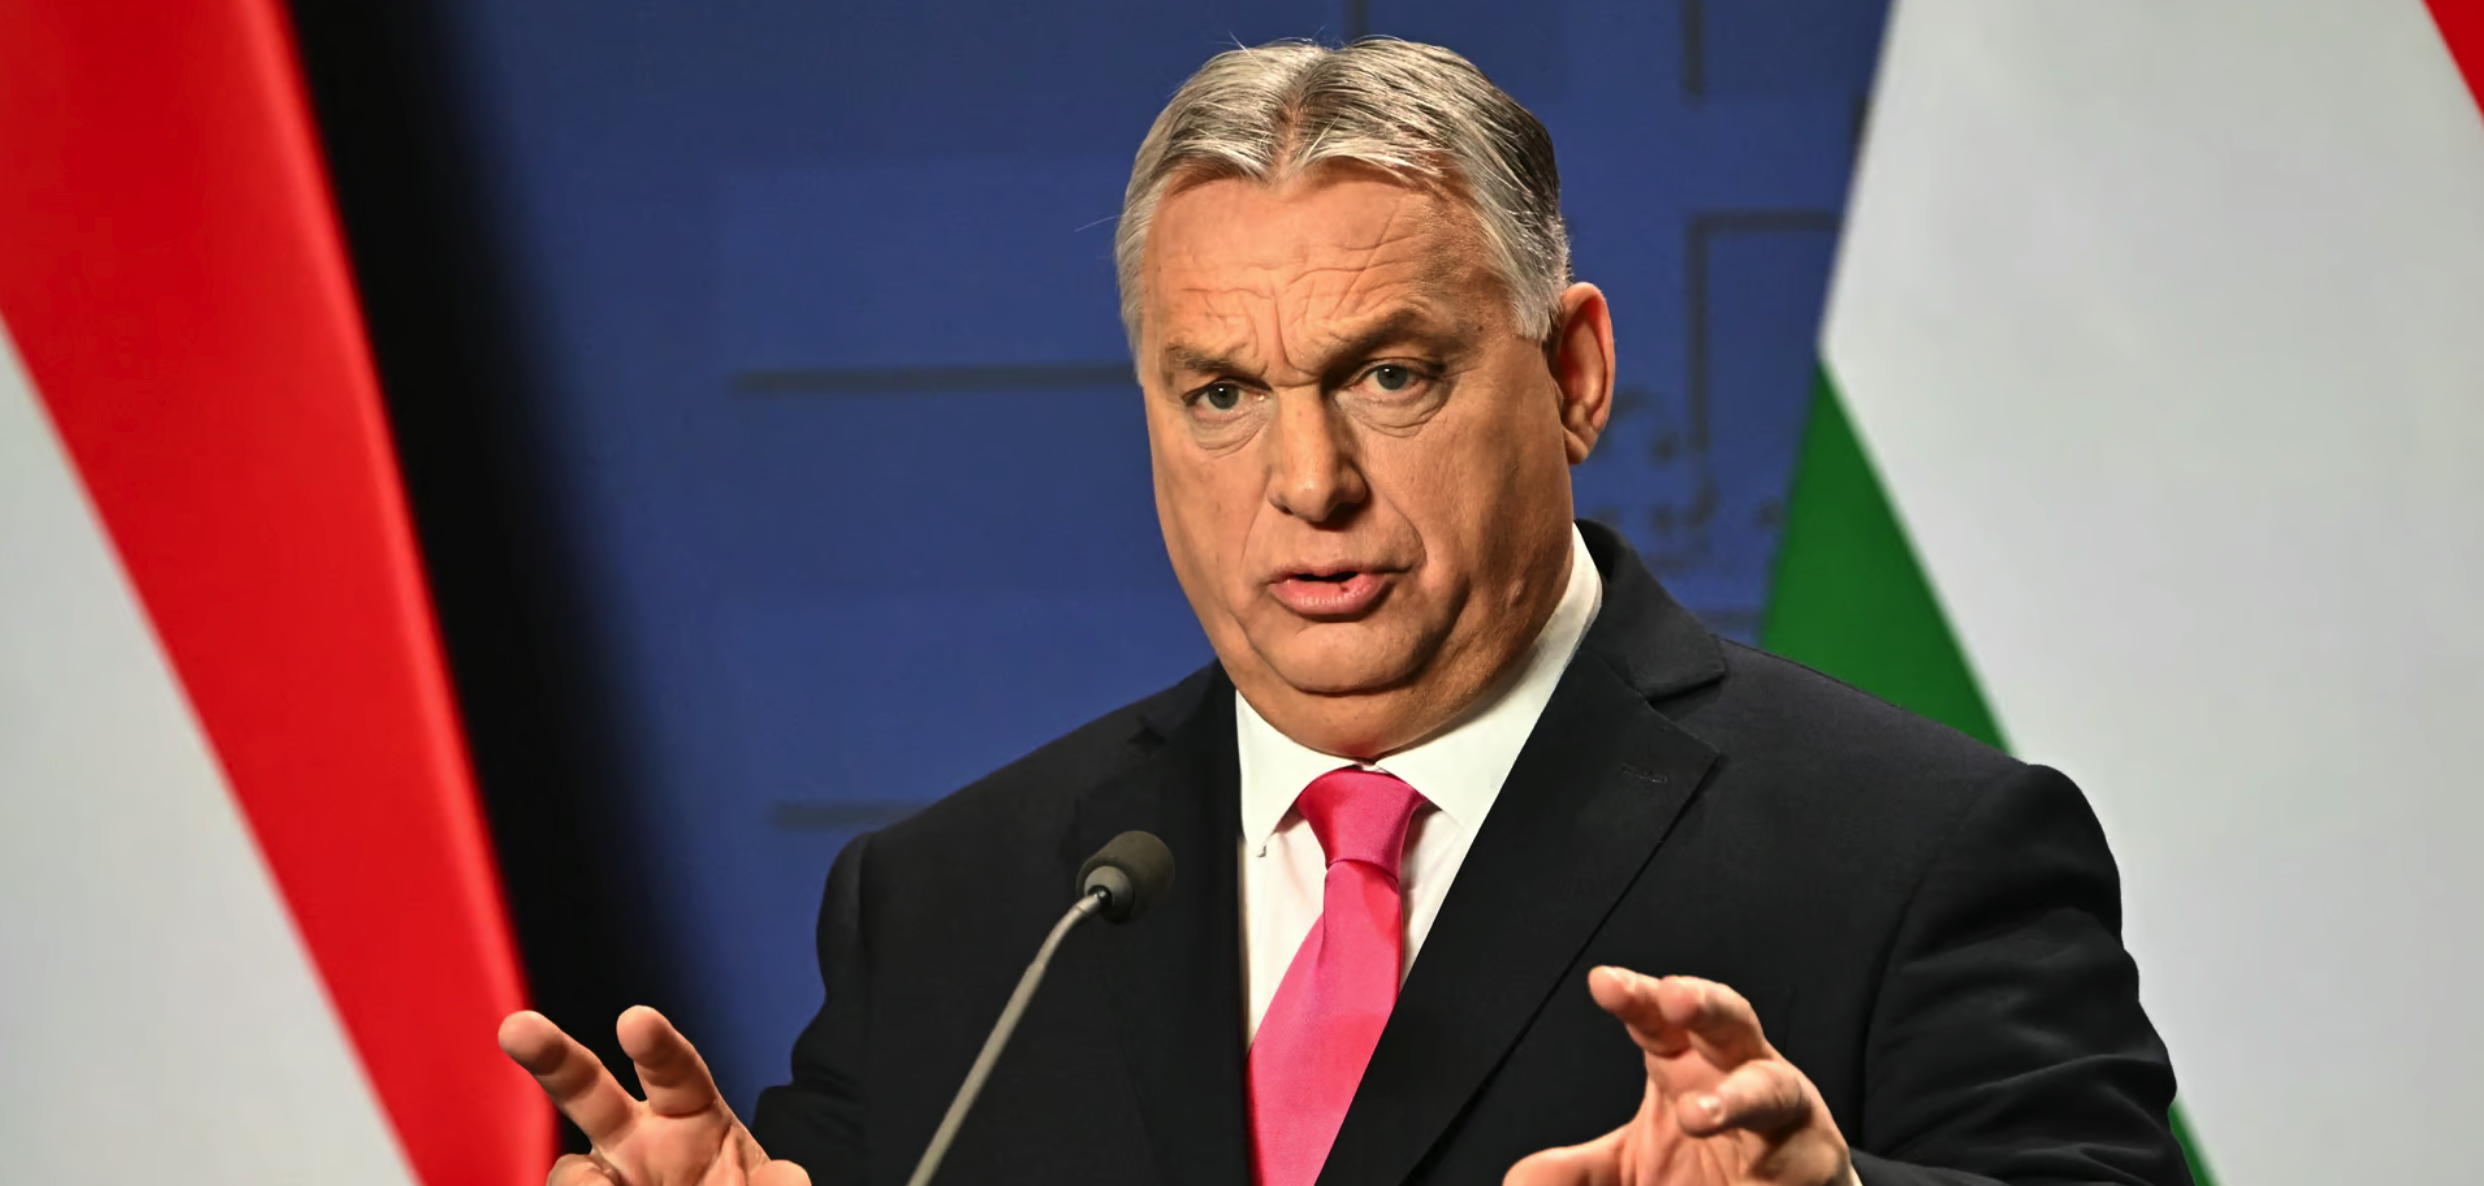 €50 billion for Ukraine: Hungary ready for compromise